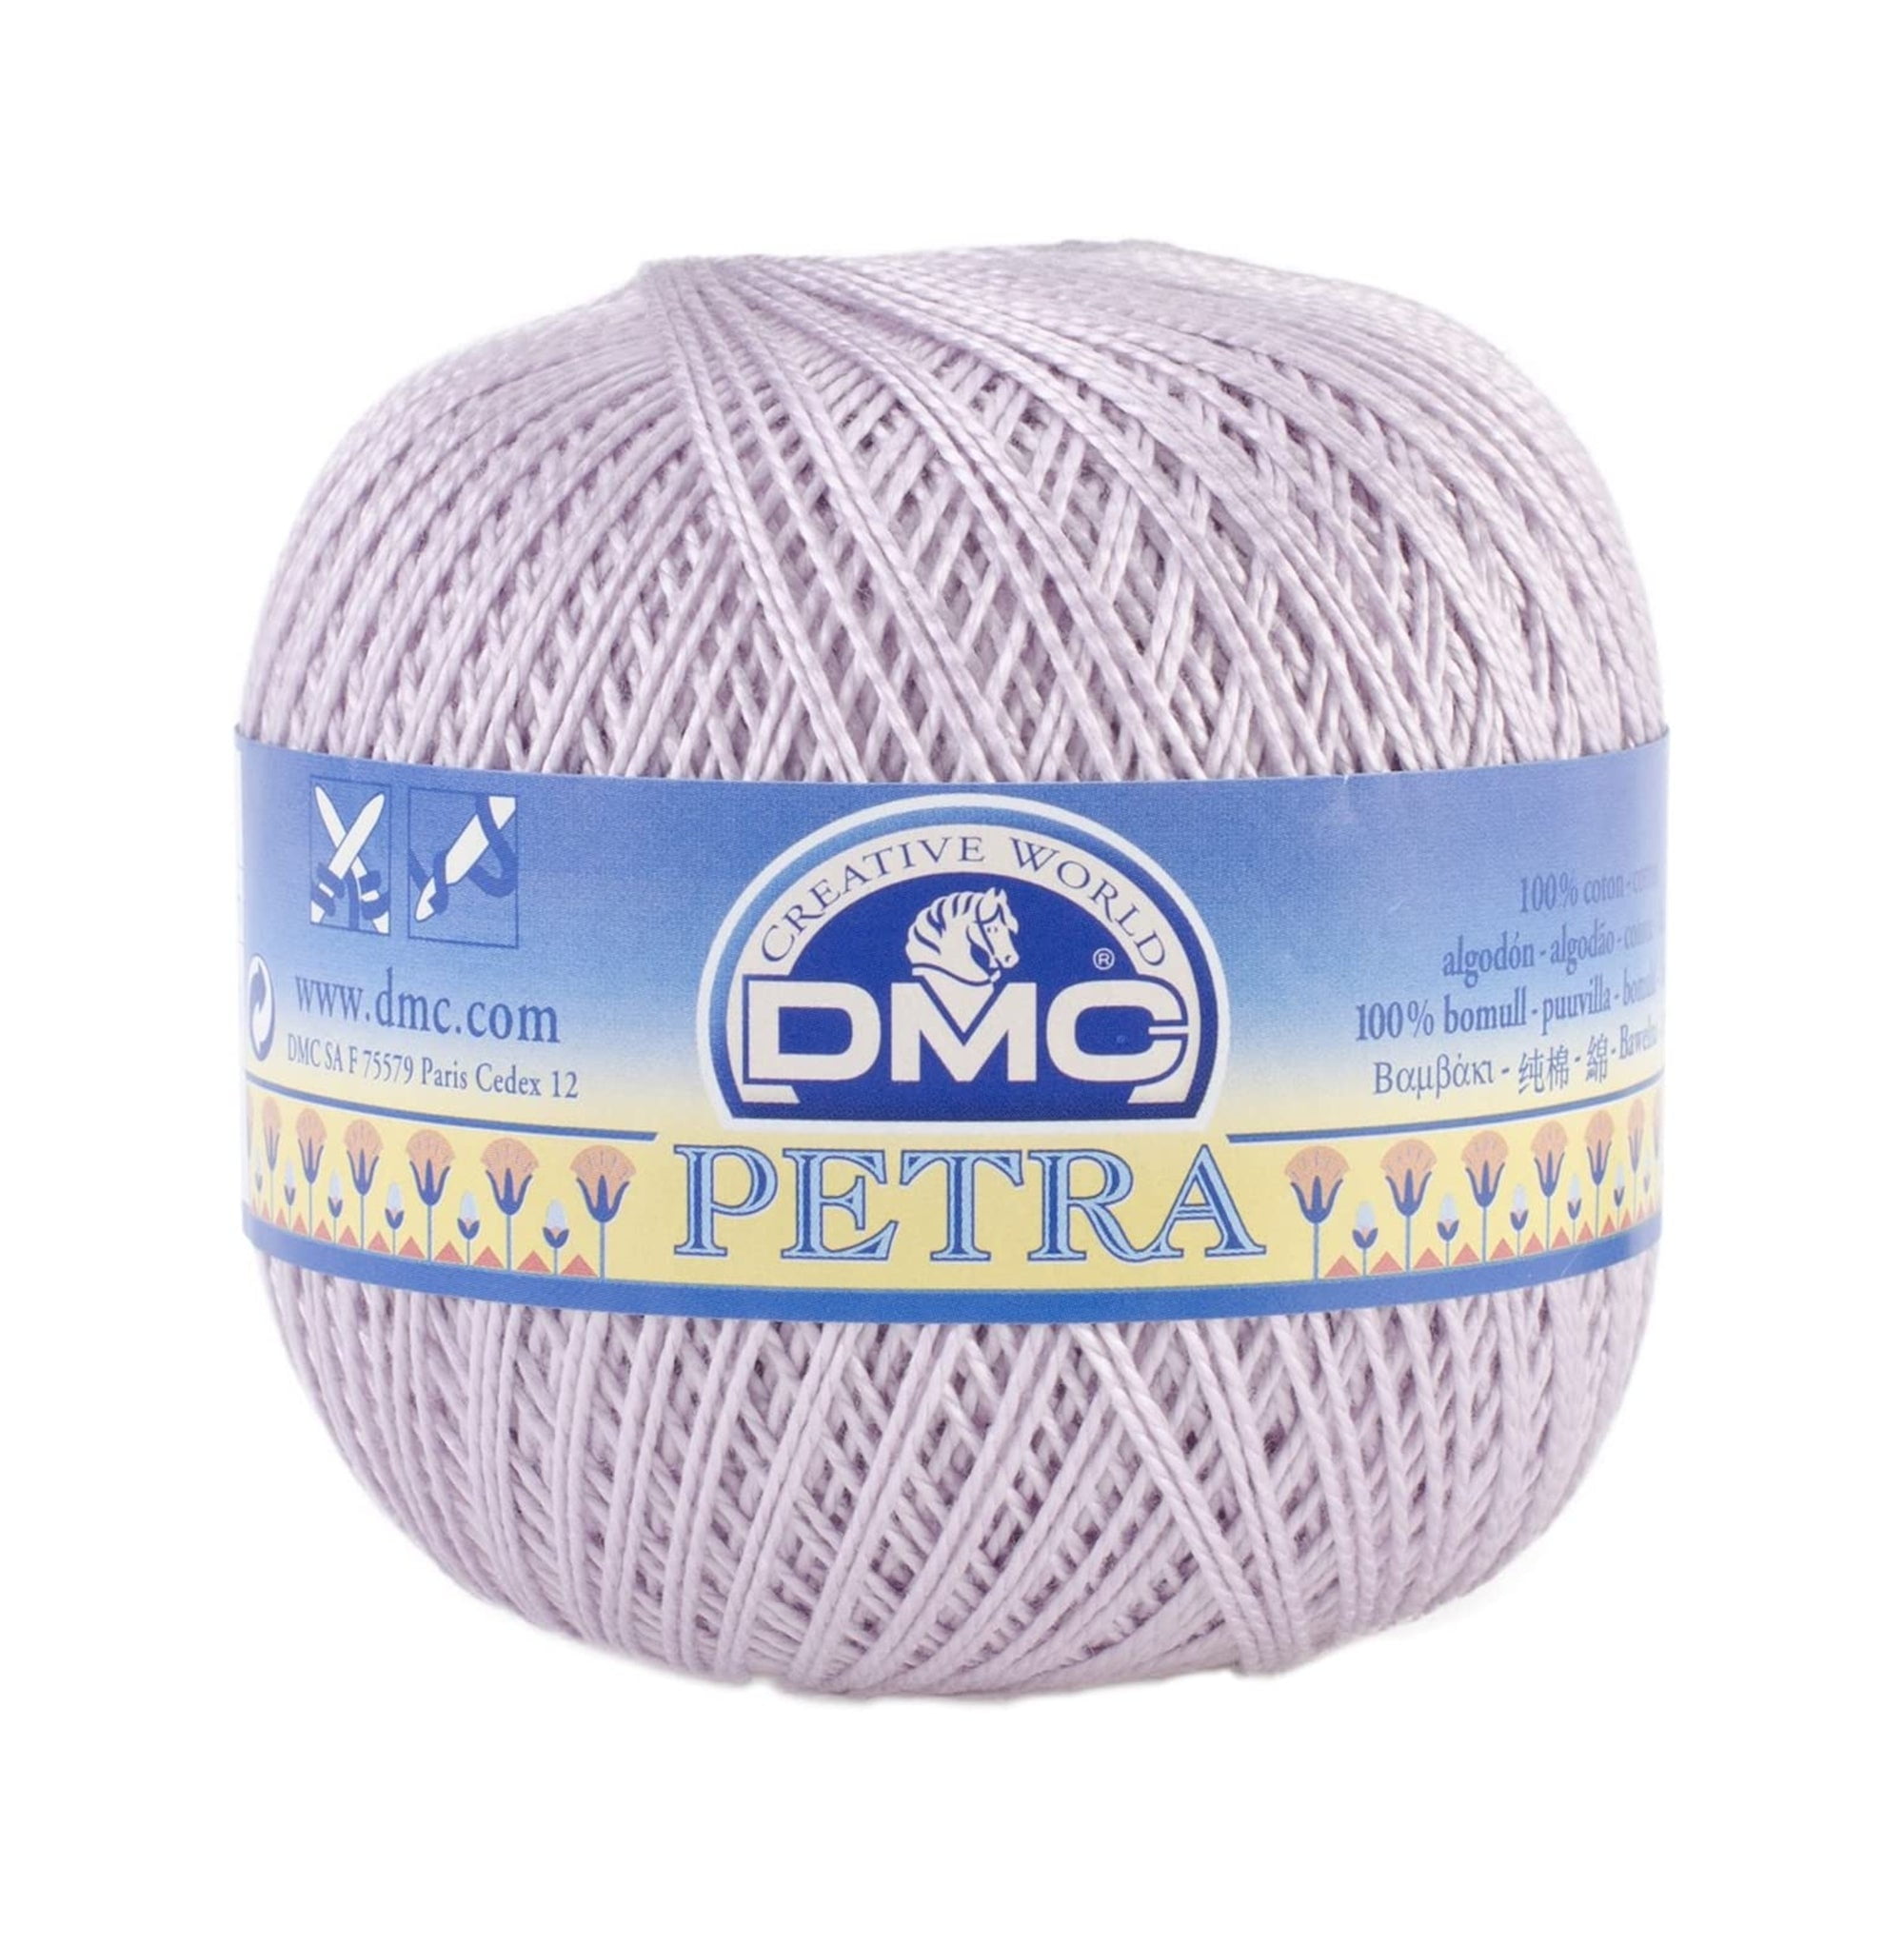 DMC Petra Crochet Cotton Thread Size 5-53805